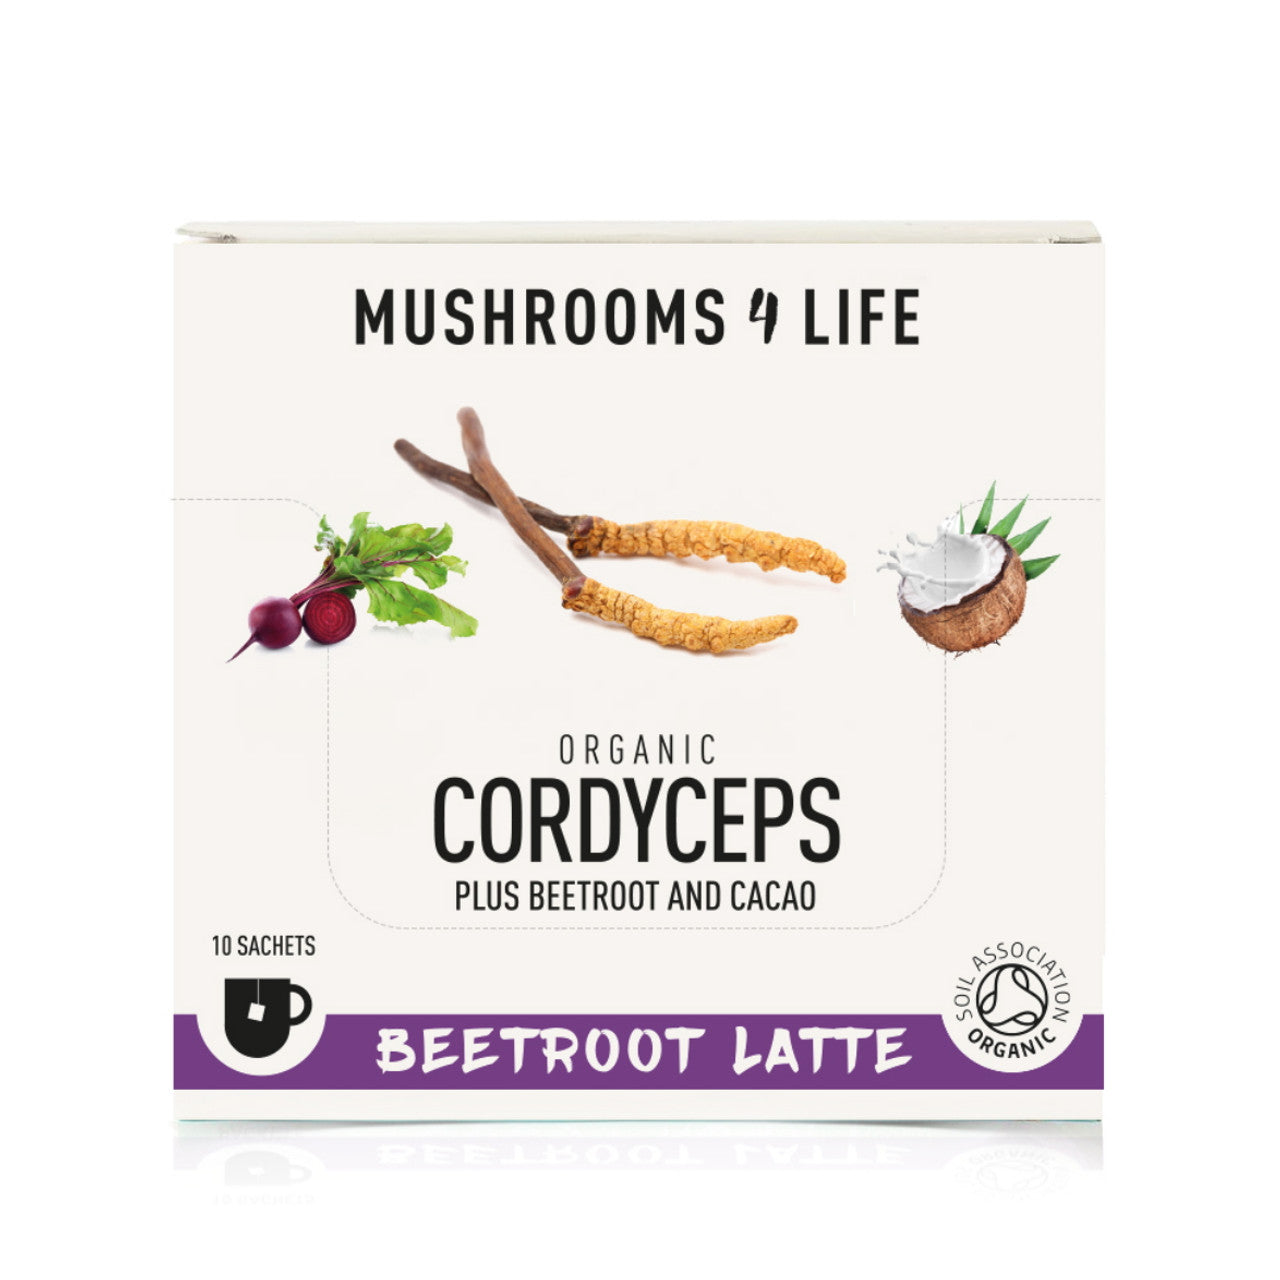 Mushrooms for Life Organic Cordyceps Beetroot Latte 130g